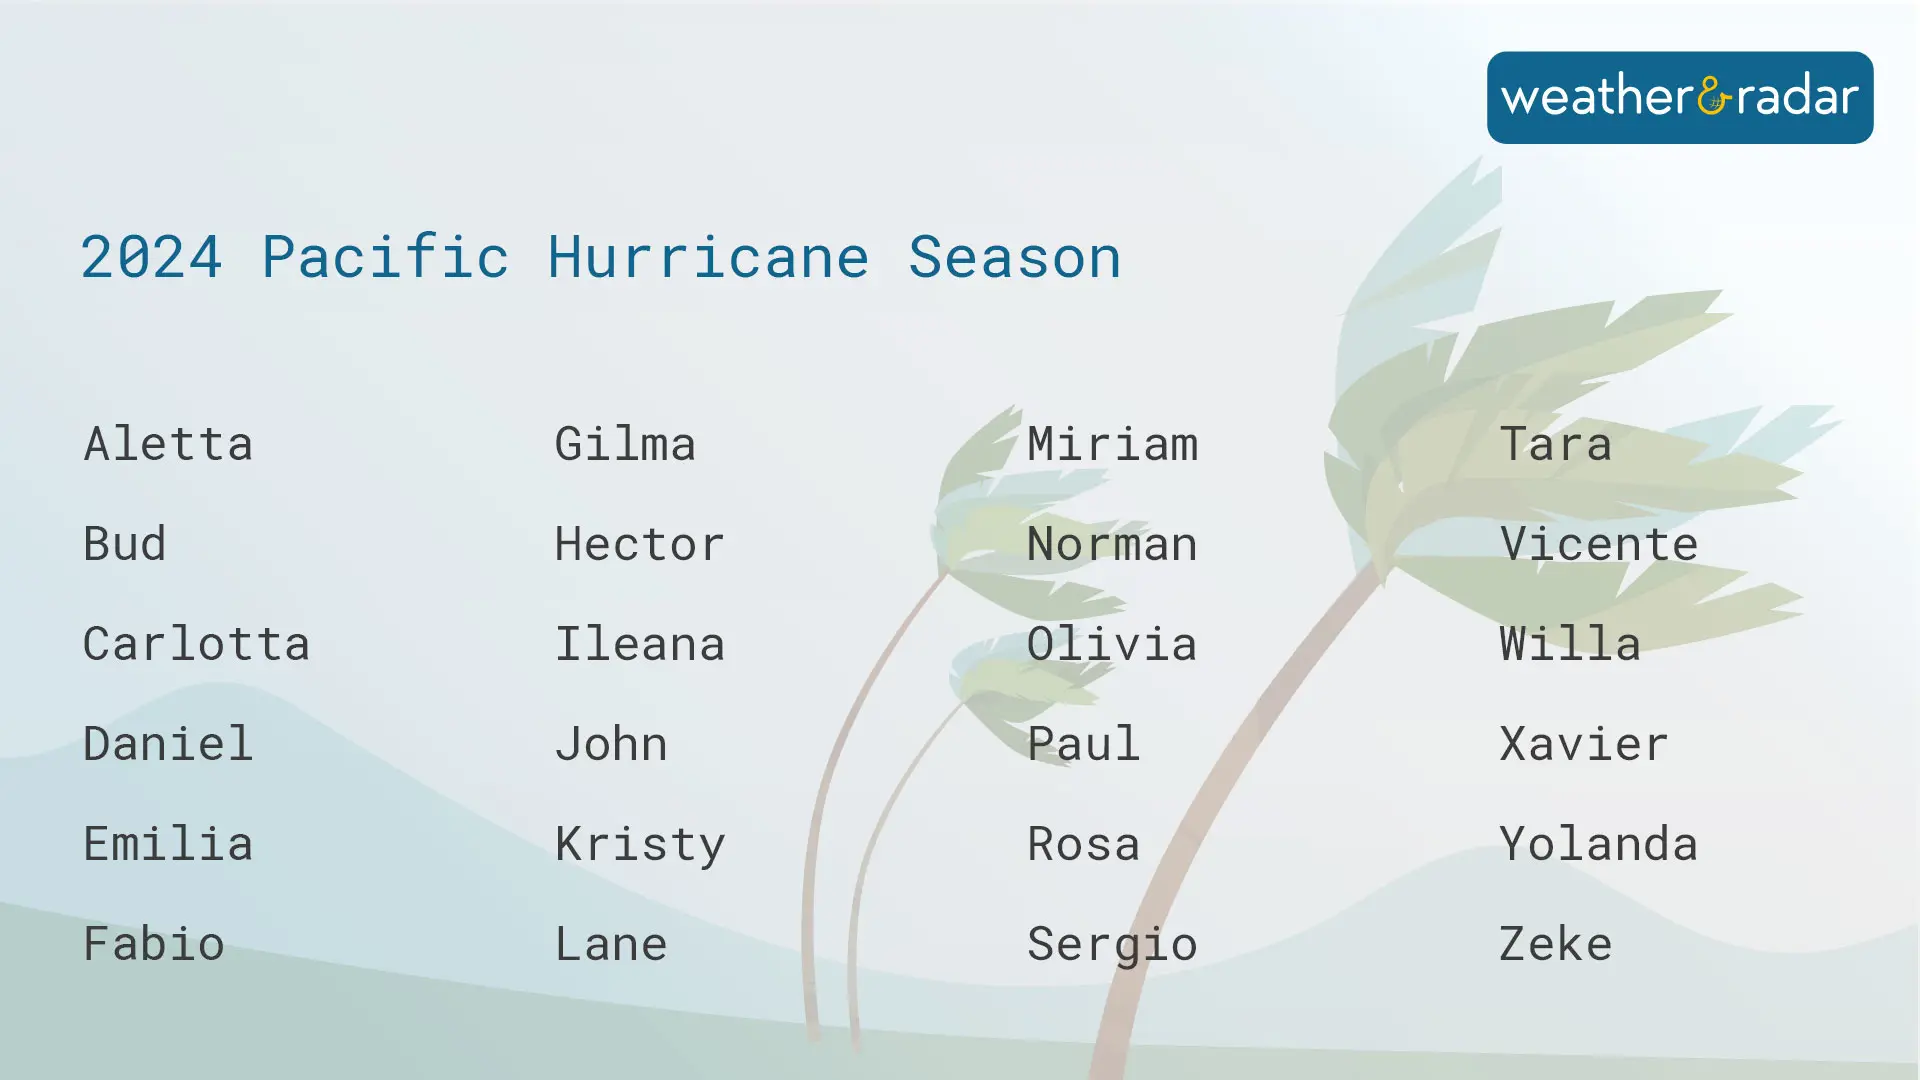 2024 Pacific Hurricane Season names